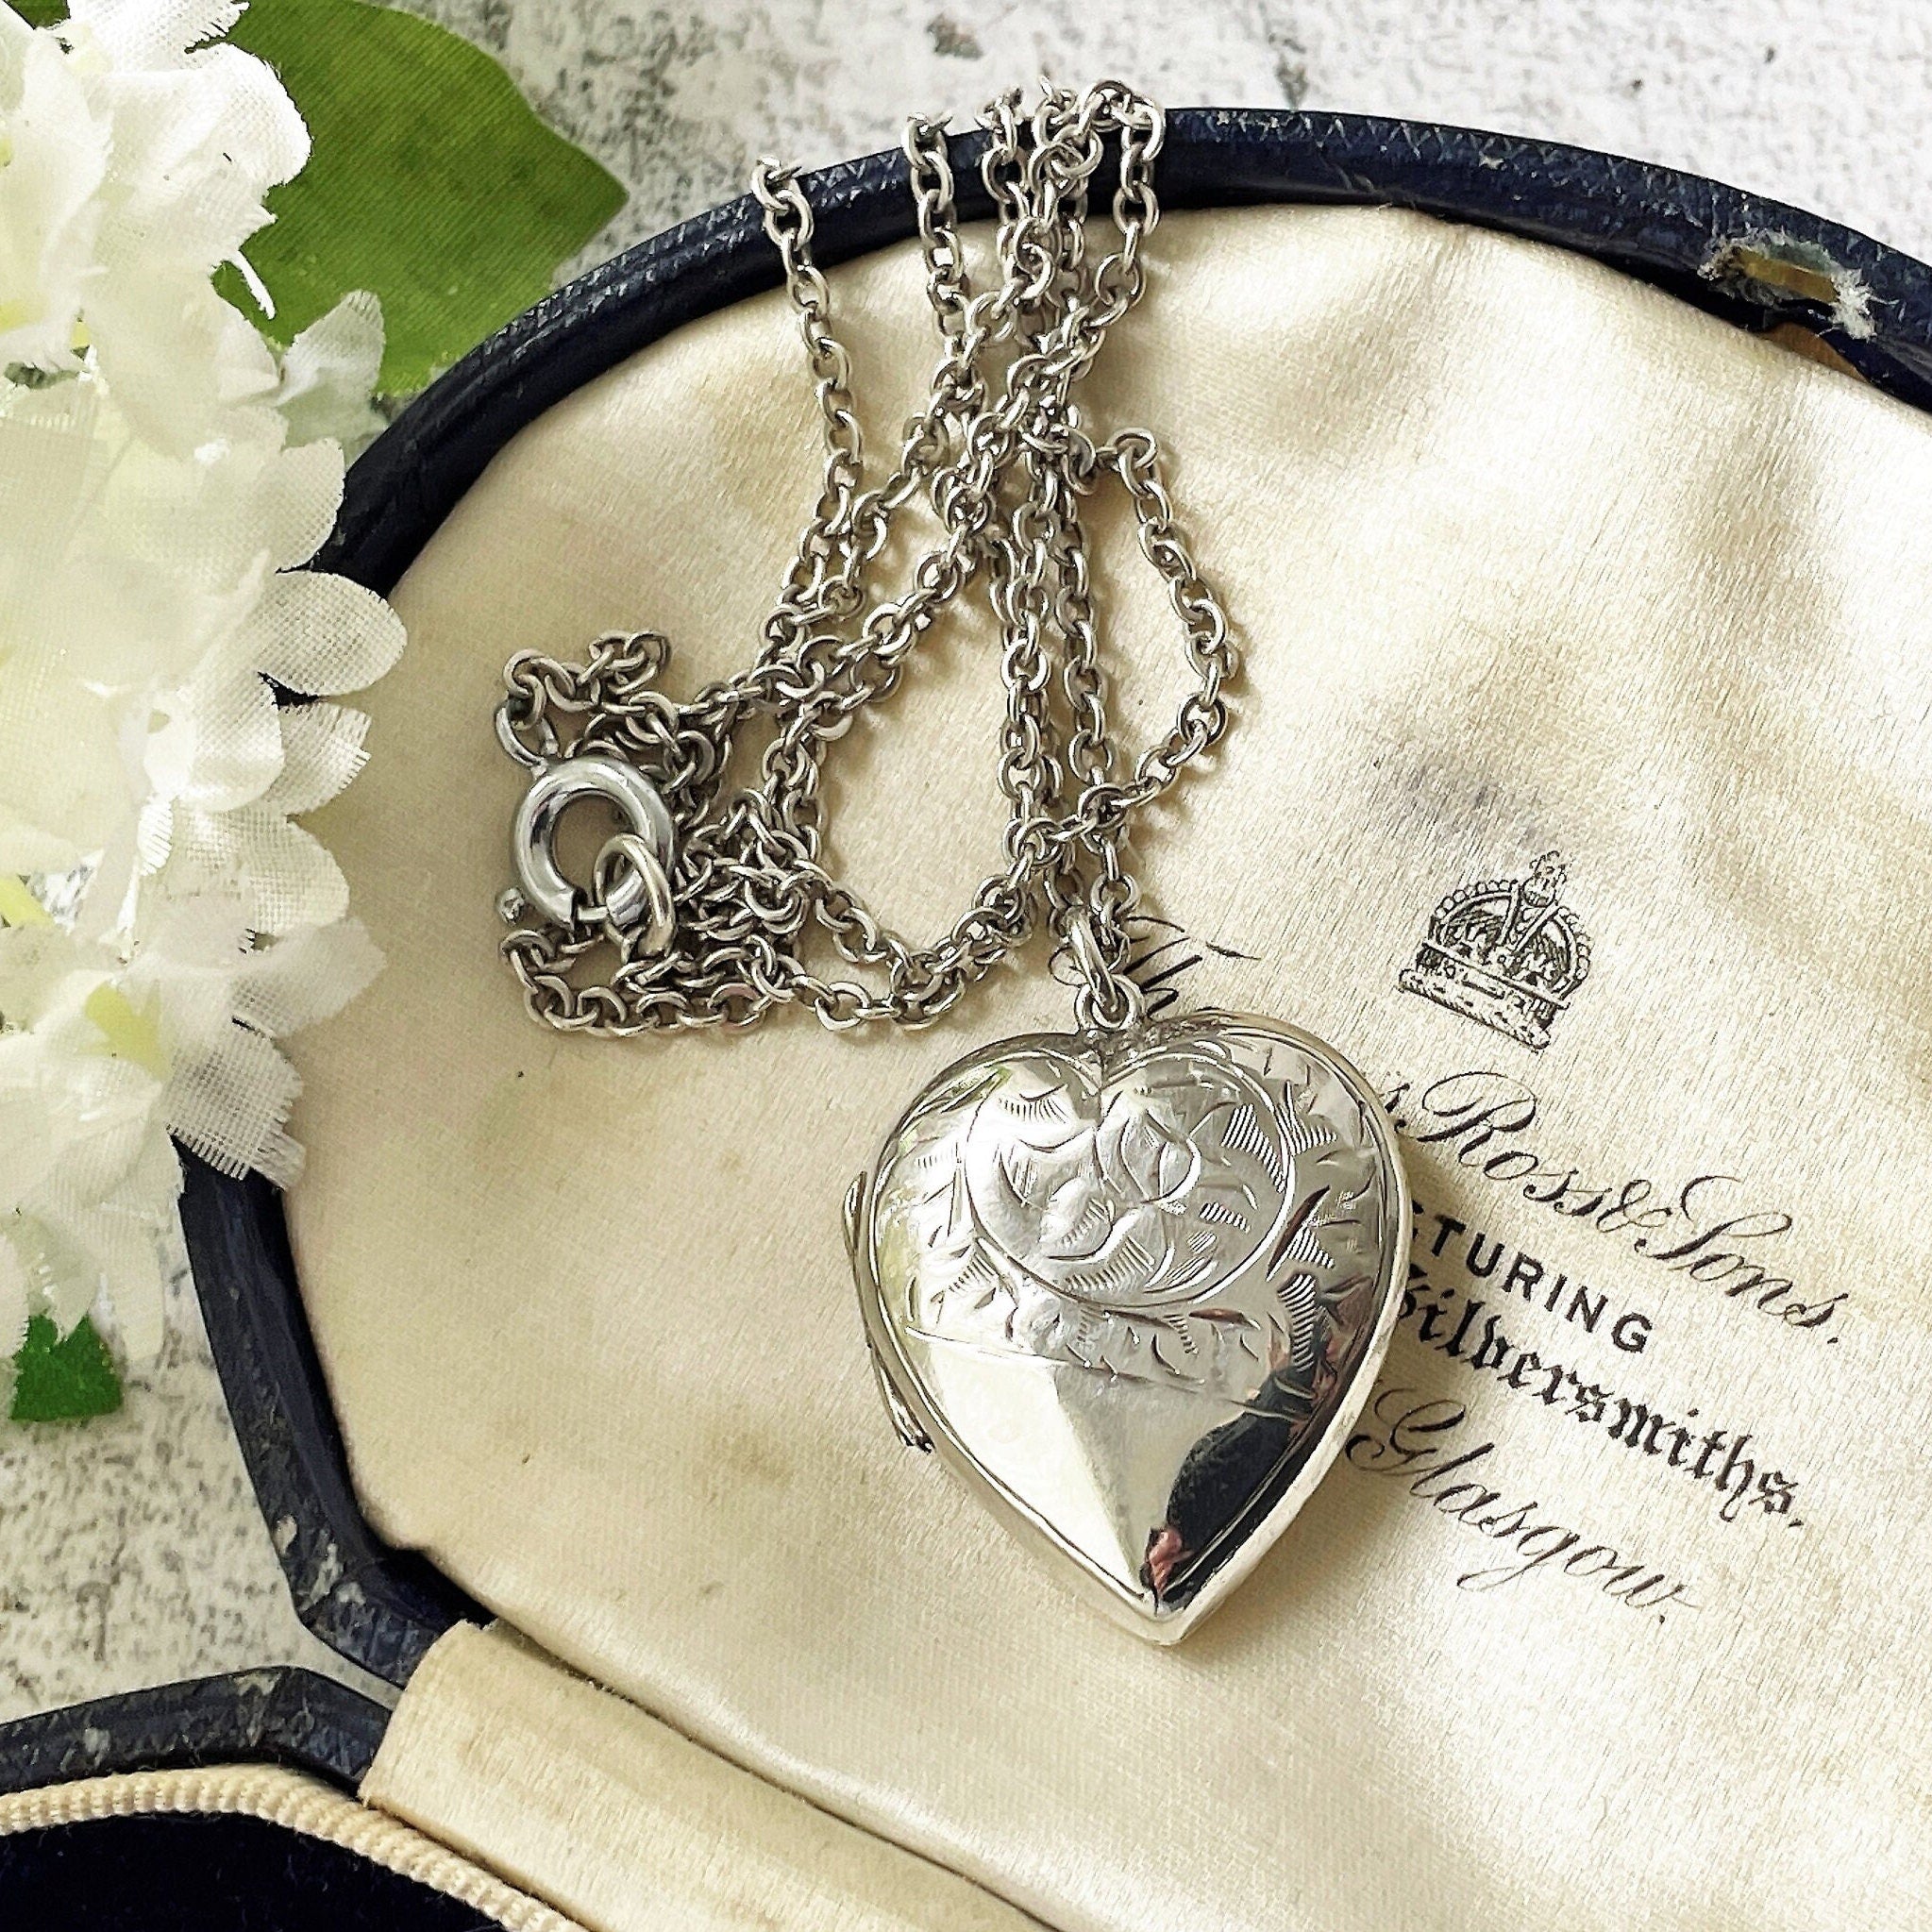 Heart Locket Necklace Sterling Silver